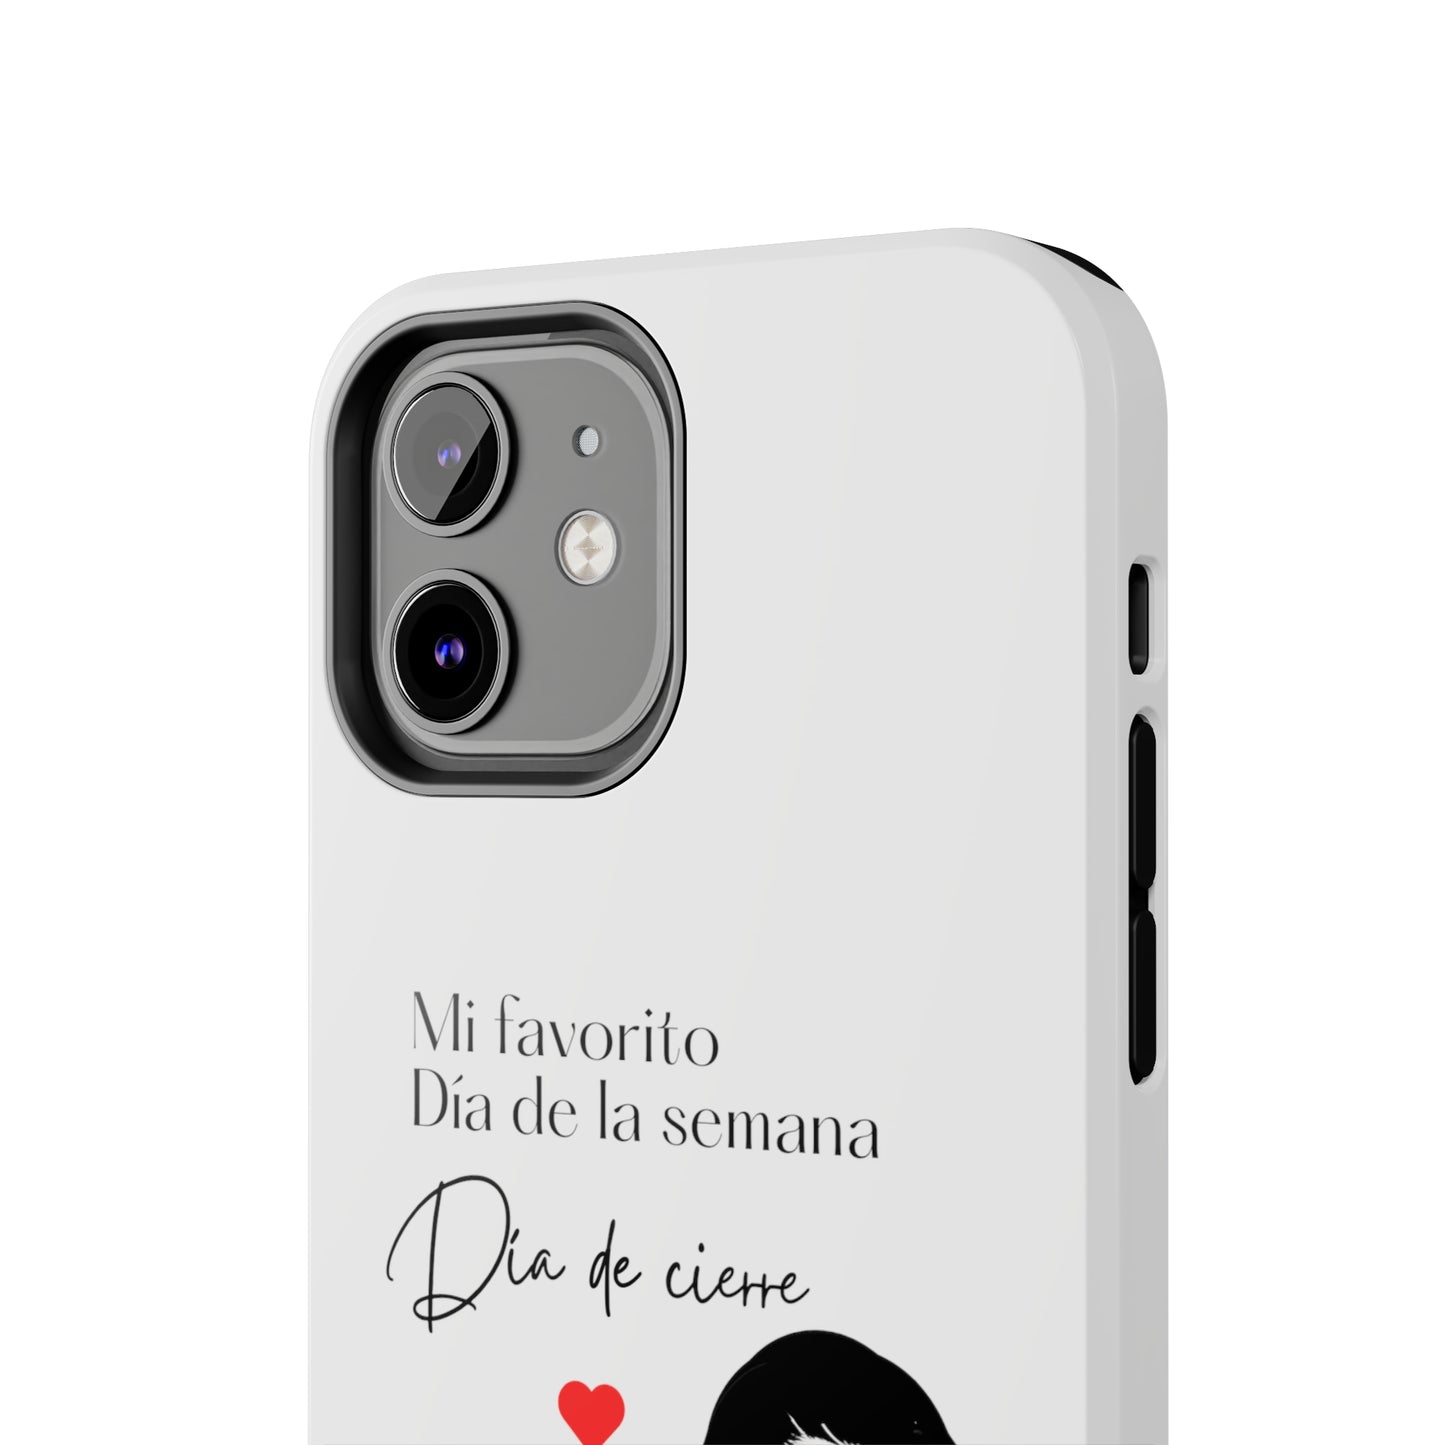 Closing Day for Latina Diva (Dia la Cierra) - iPhone Cases